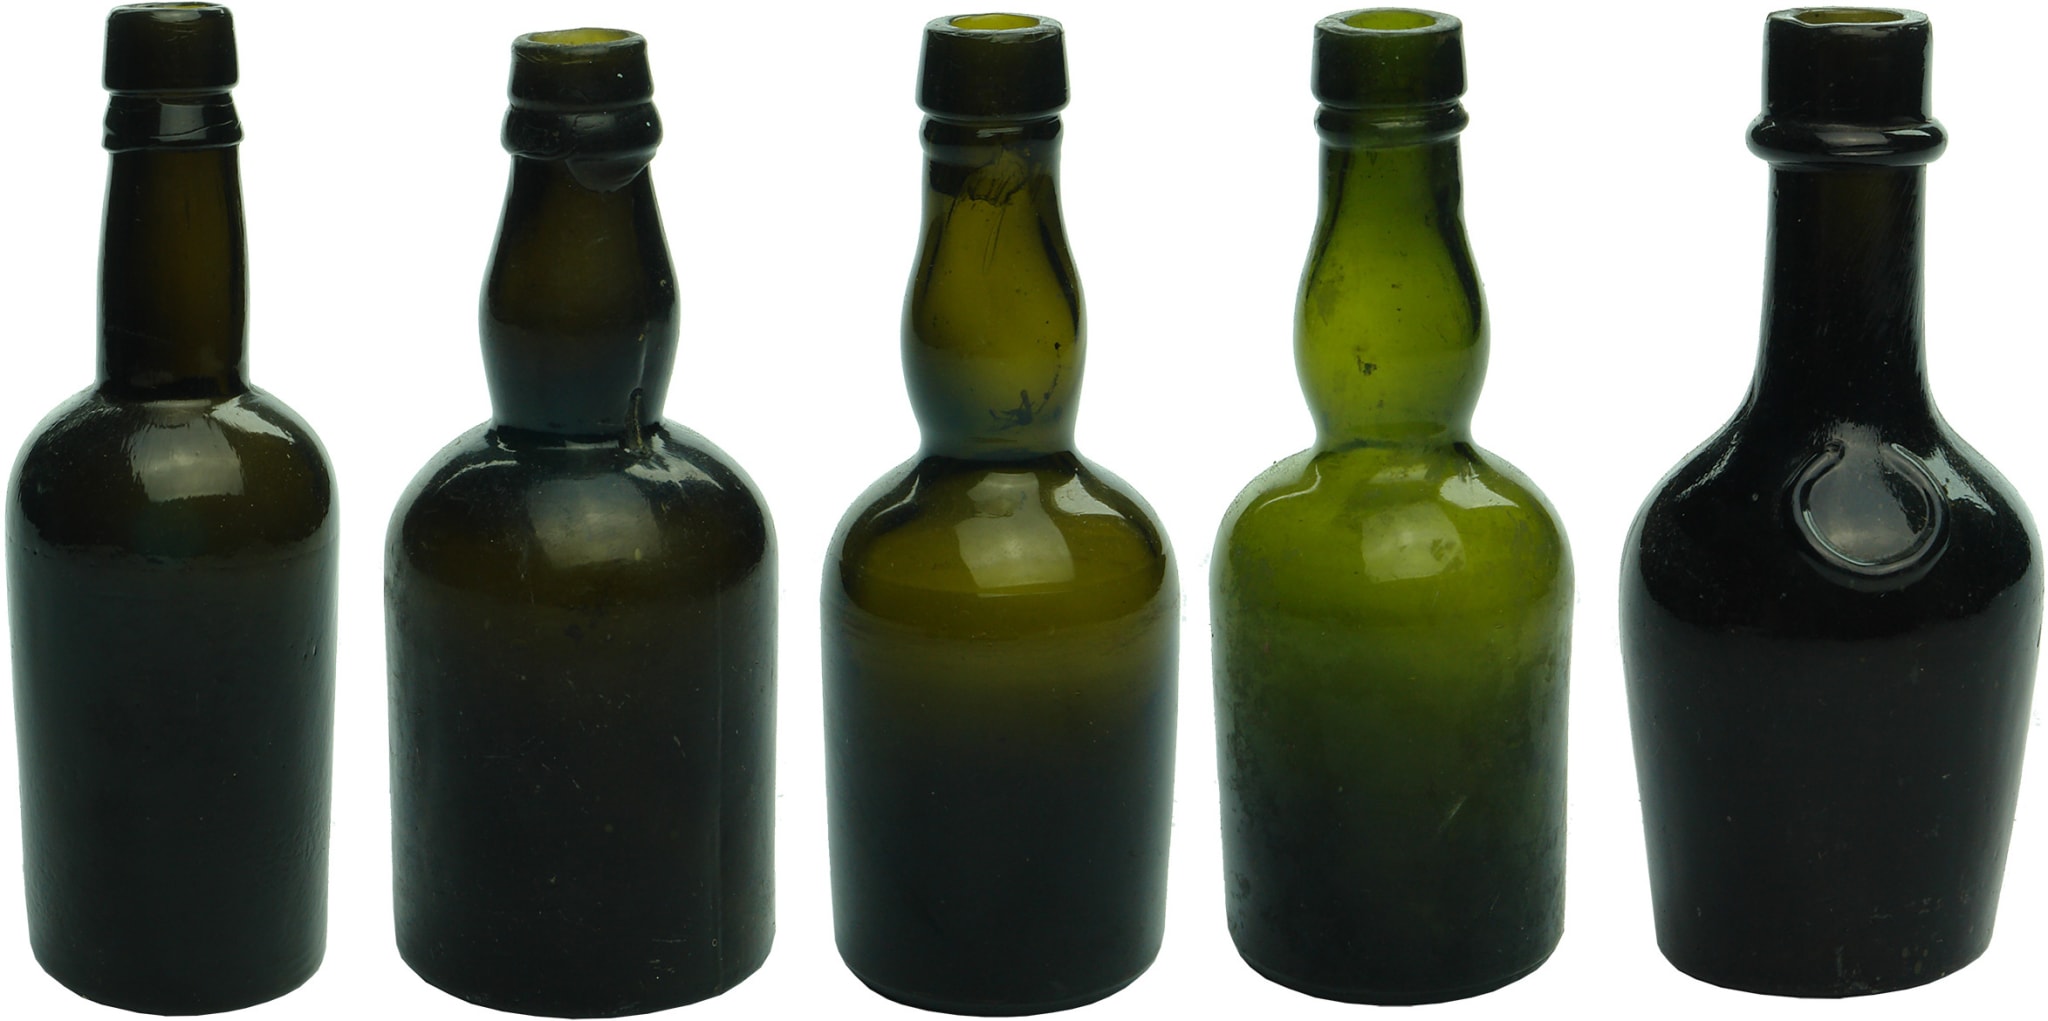 Sample Sized Antique Black Glass Bottles